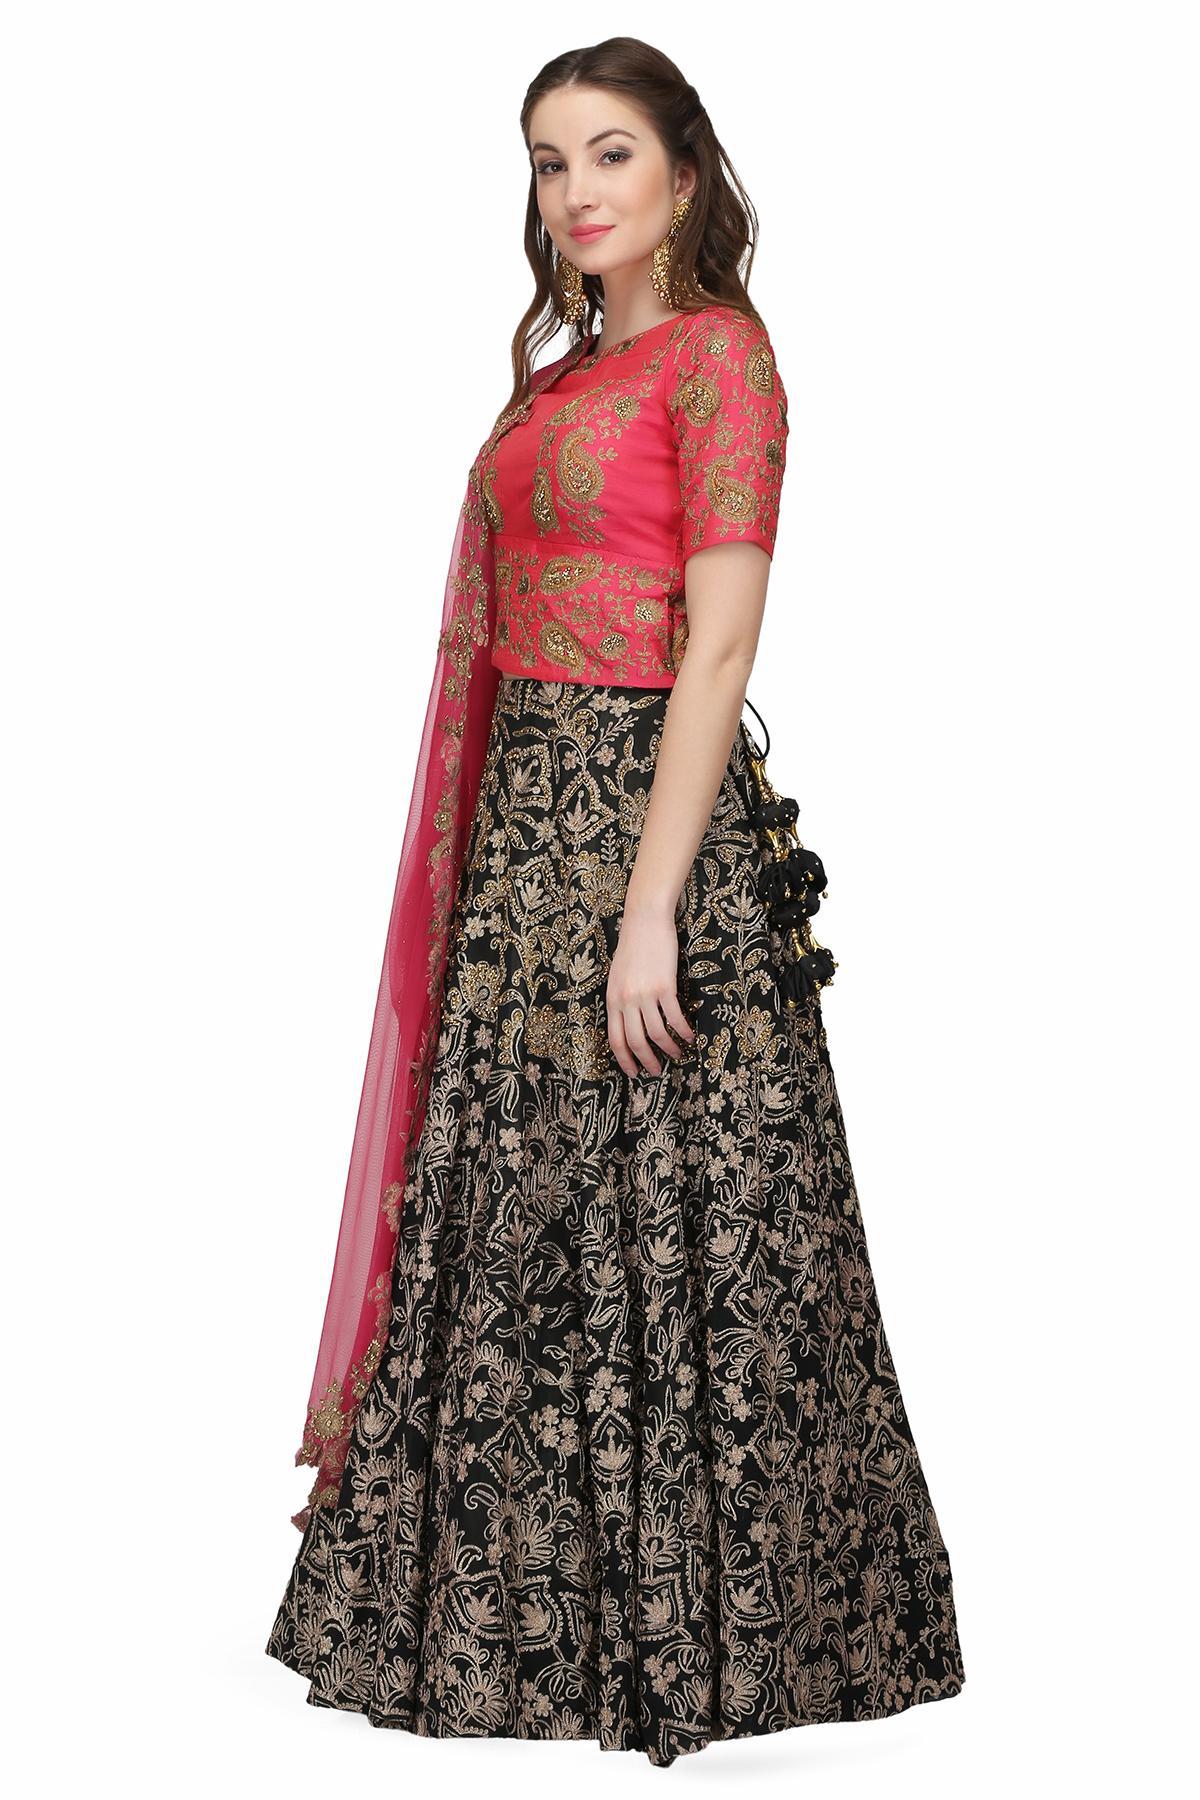 Stunning Aari Work Blouse Designs 2020 For Silk Sarees!